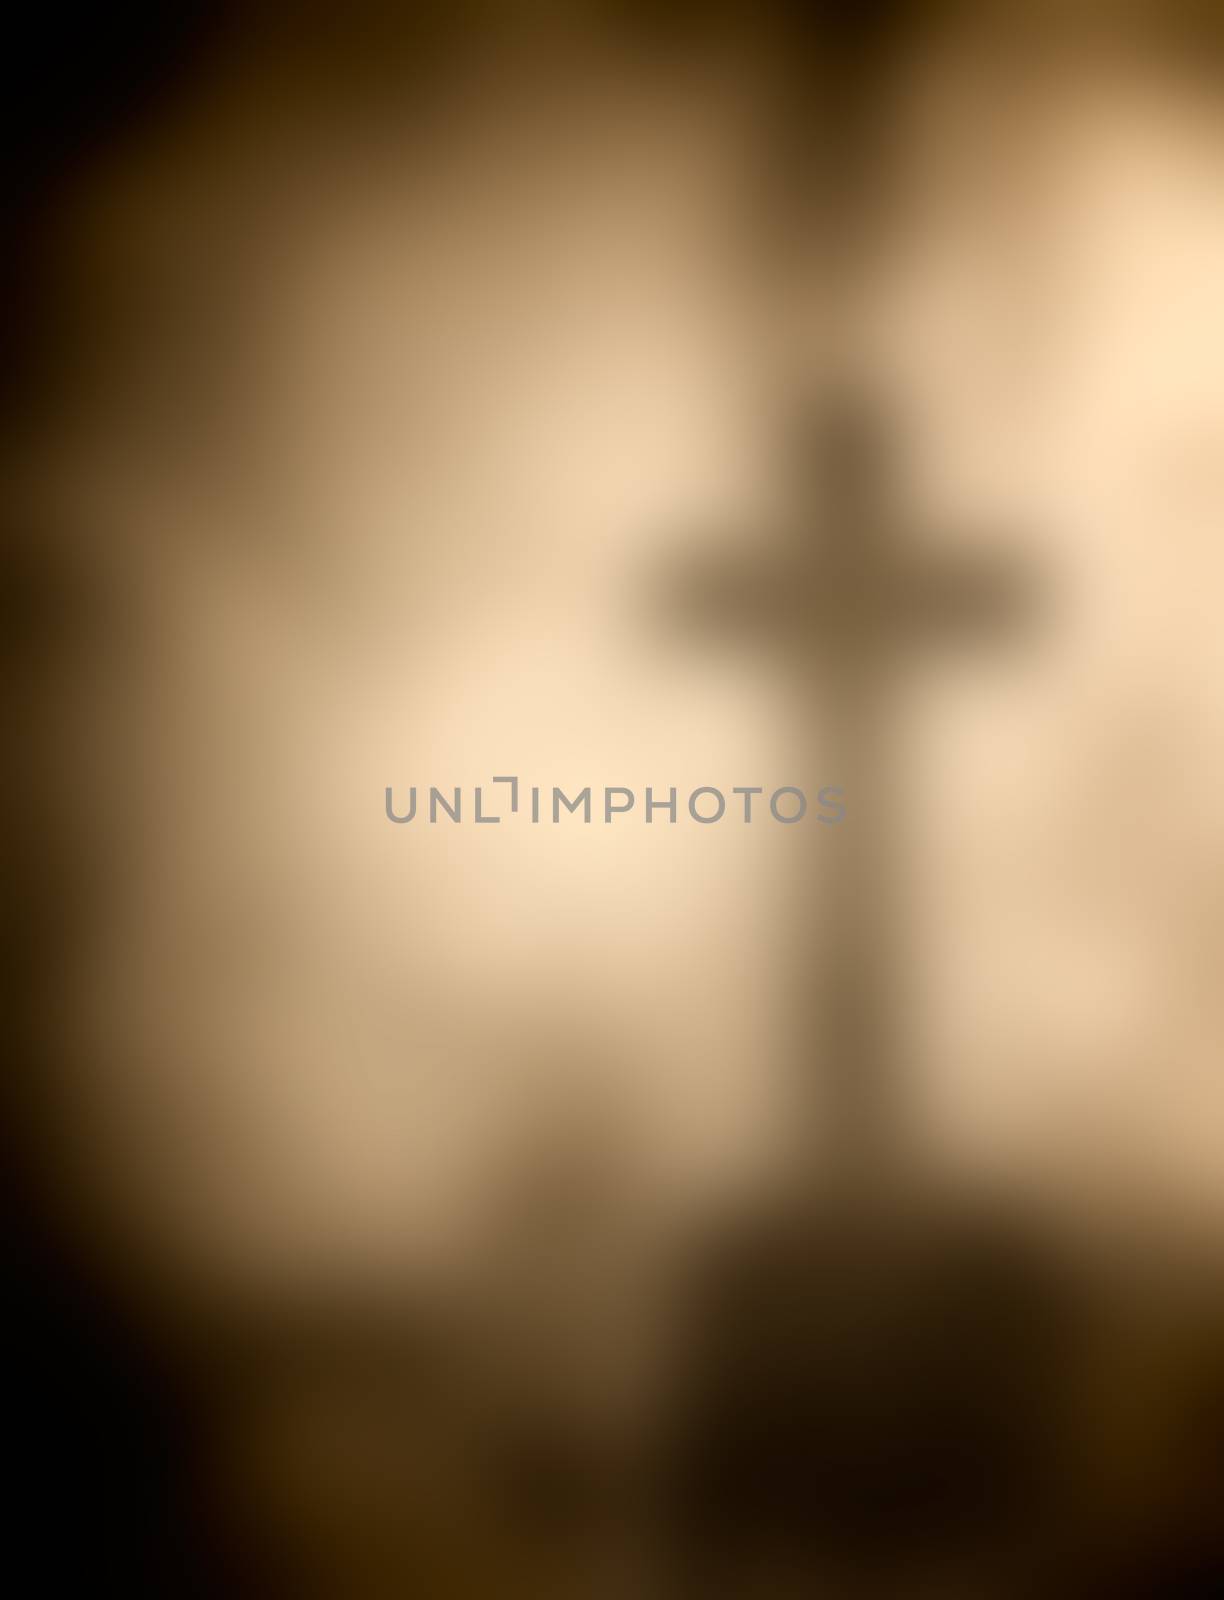 Abstract blur Cross bokeh background by motorolka